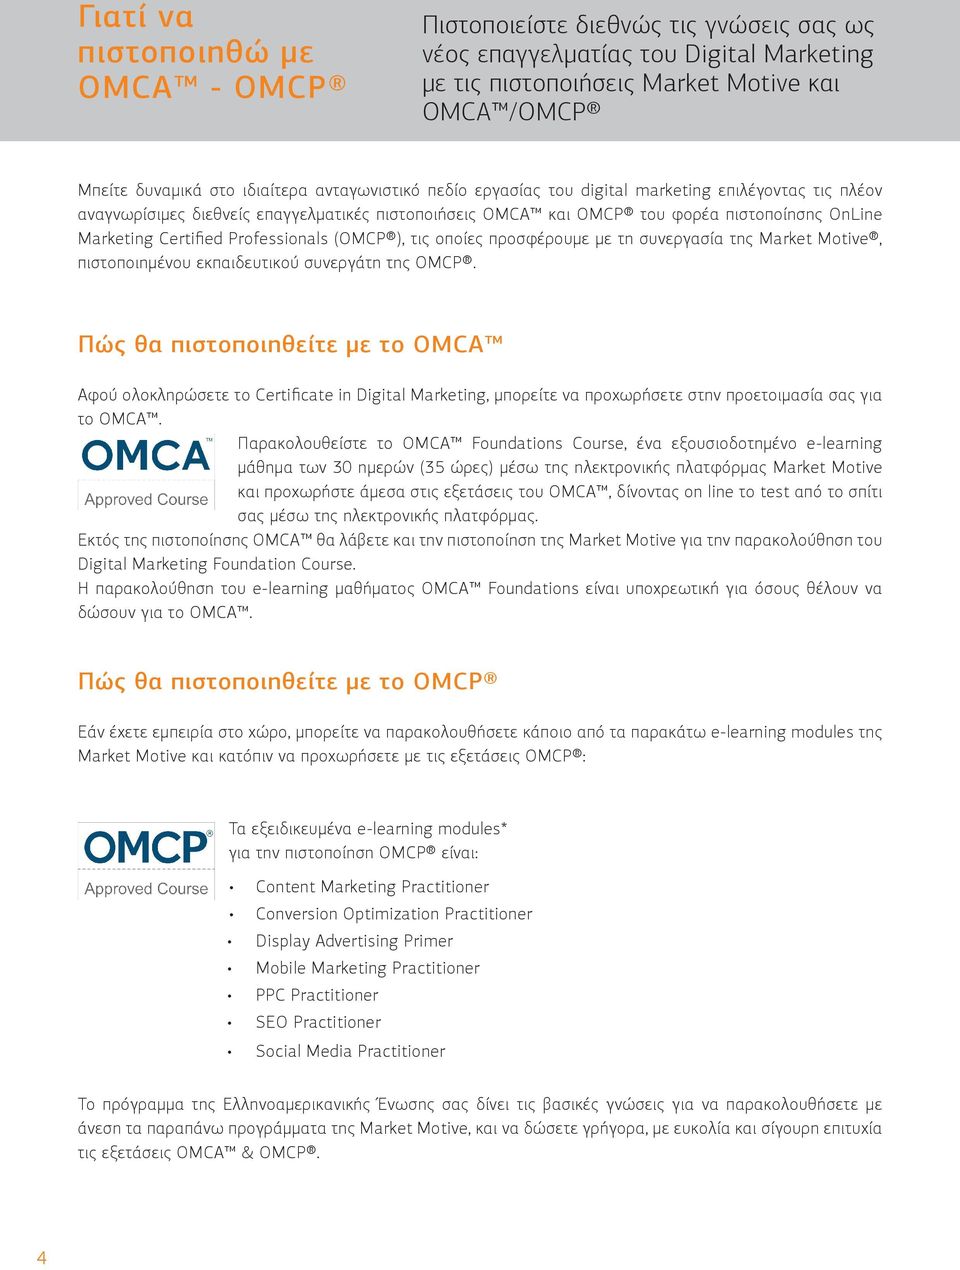 Professionals (OMCP ), τις οποίες προσφέρουμε με τη συνεργασία της Market Motive, πιστοποιημένου εκπαιδευτικού συνεργάτη της OMCP.